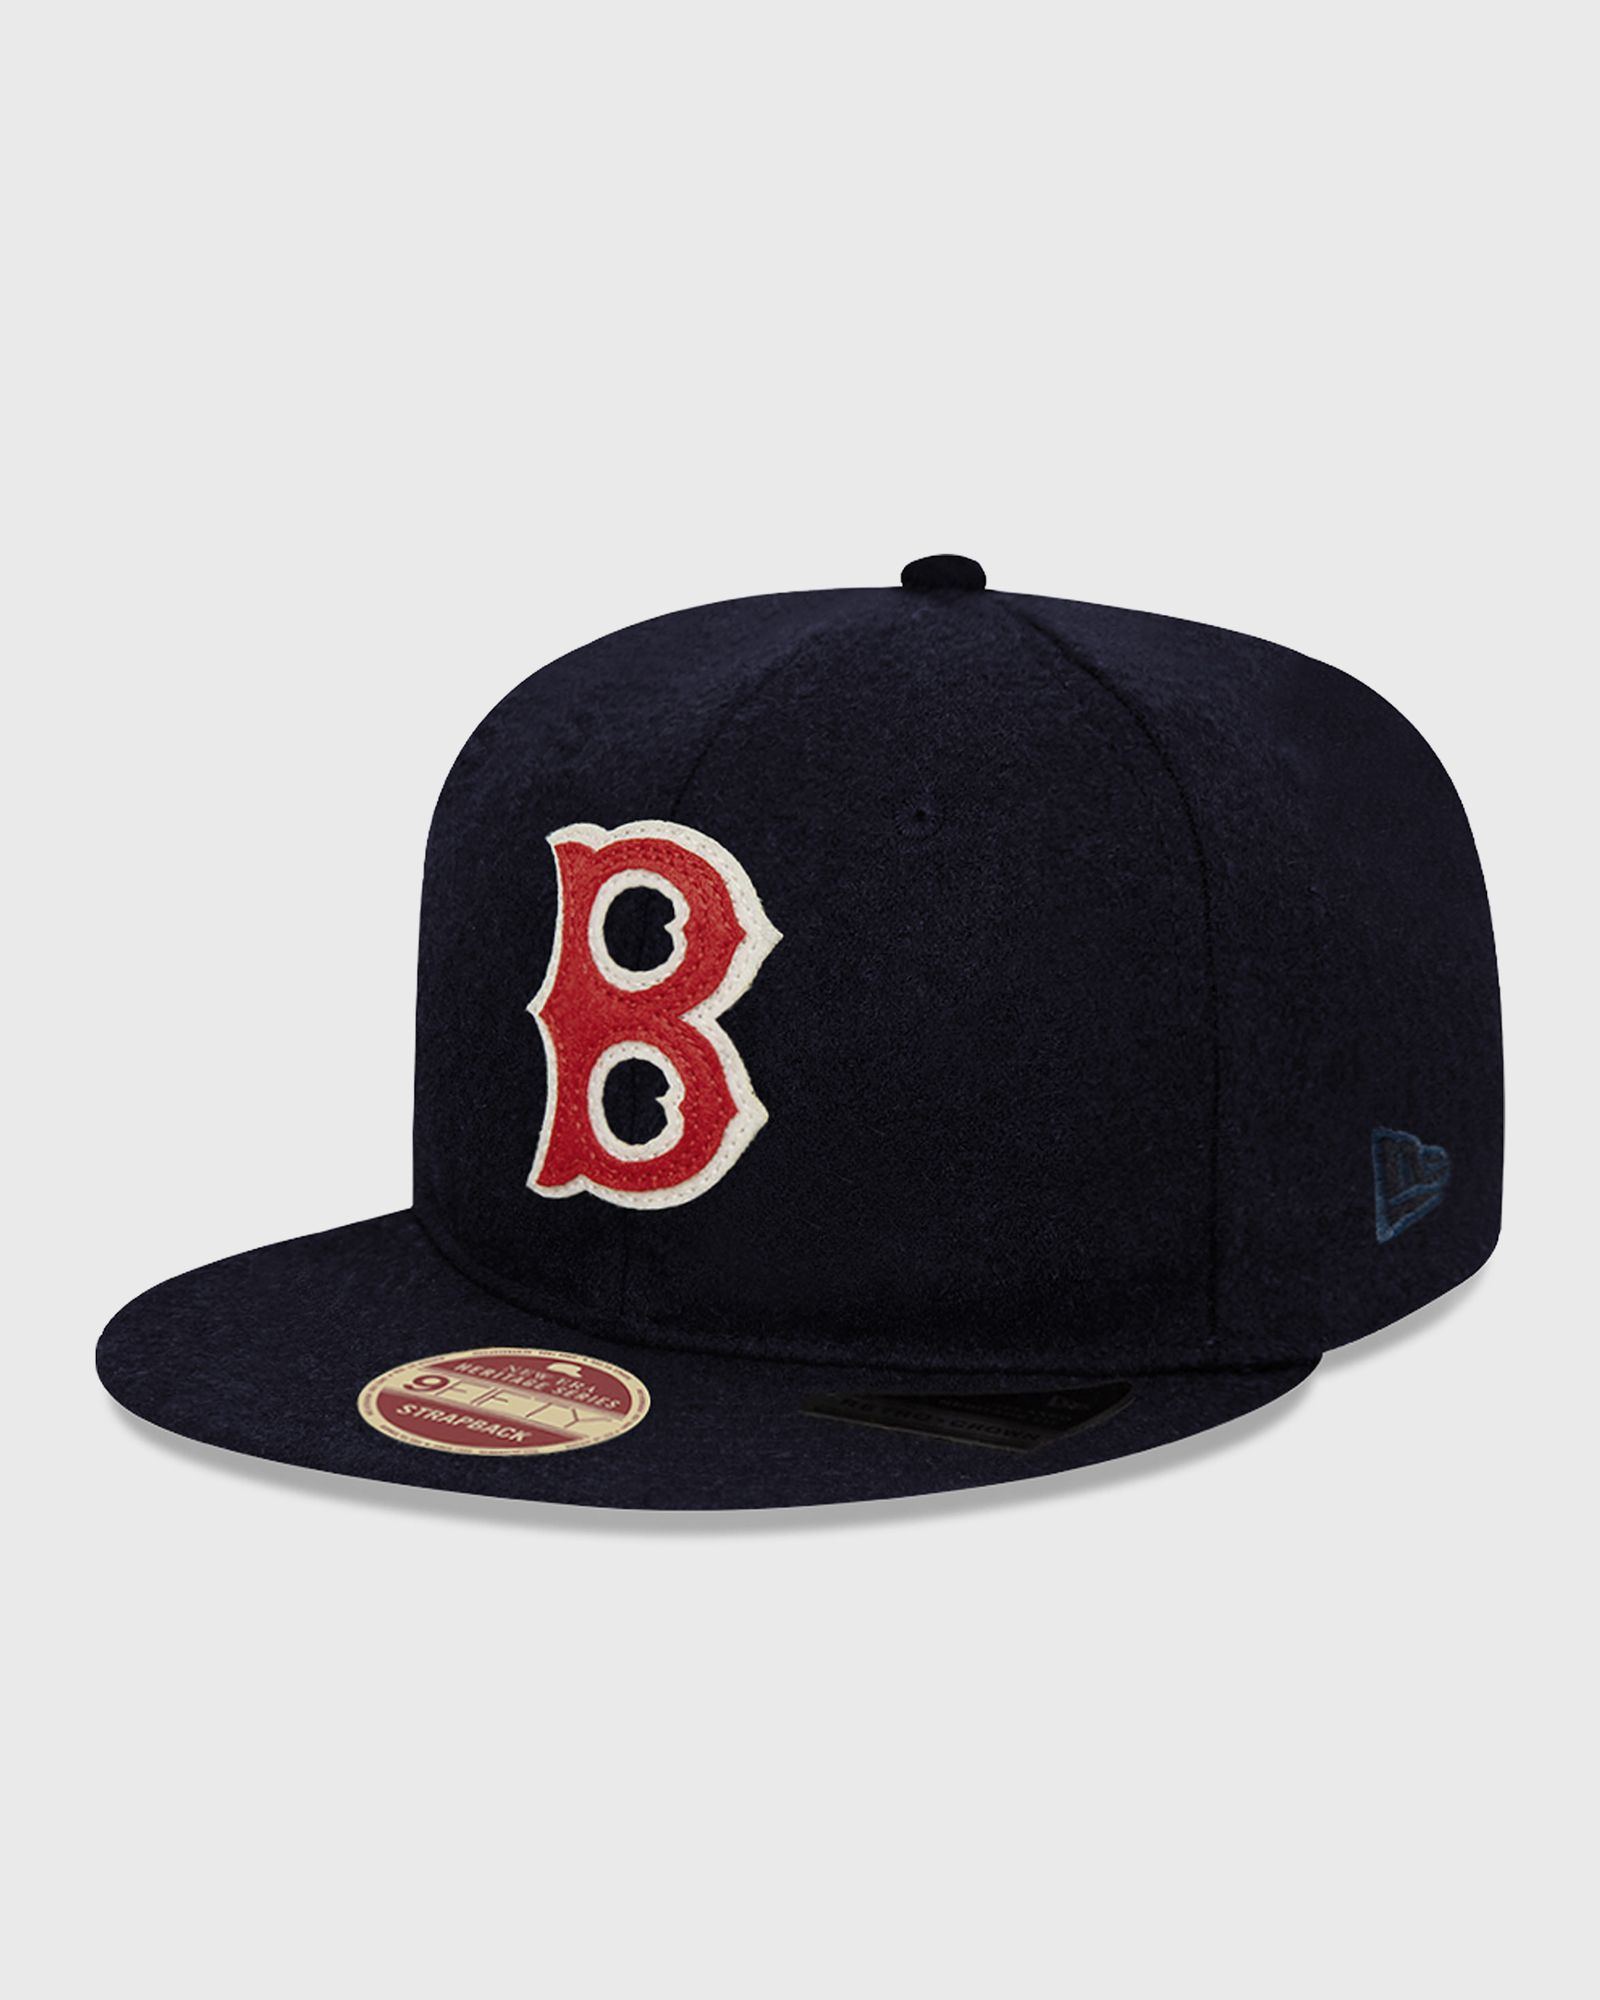 New Era - heritage series 9fifty boston red sox otc men caps black in größe:m/l